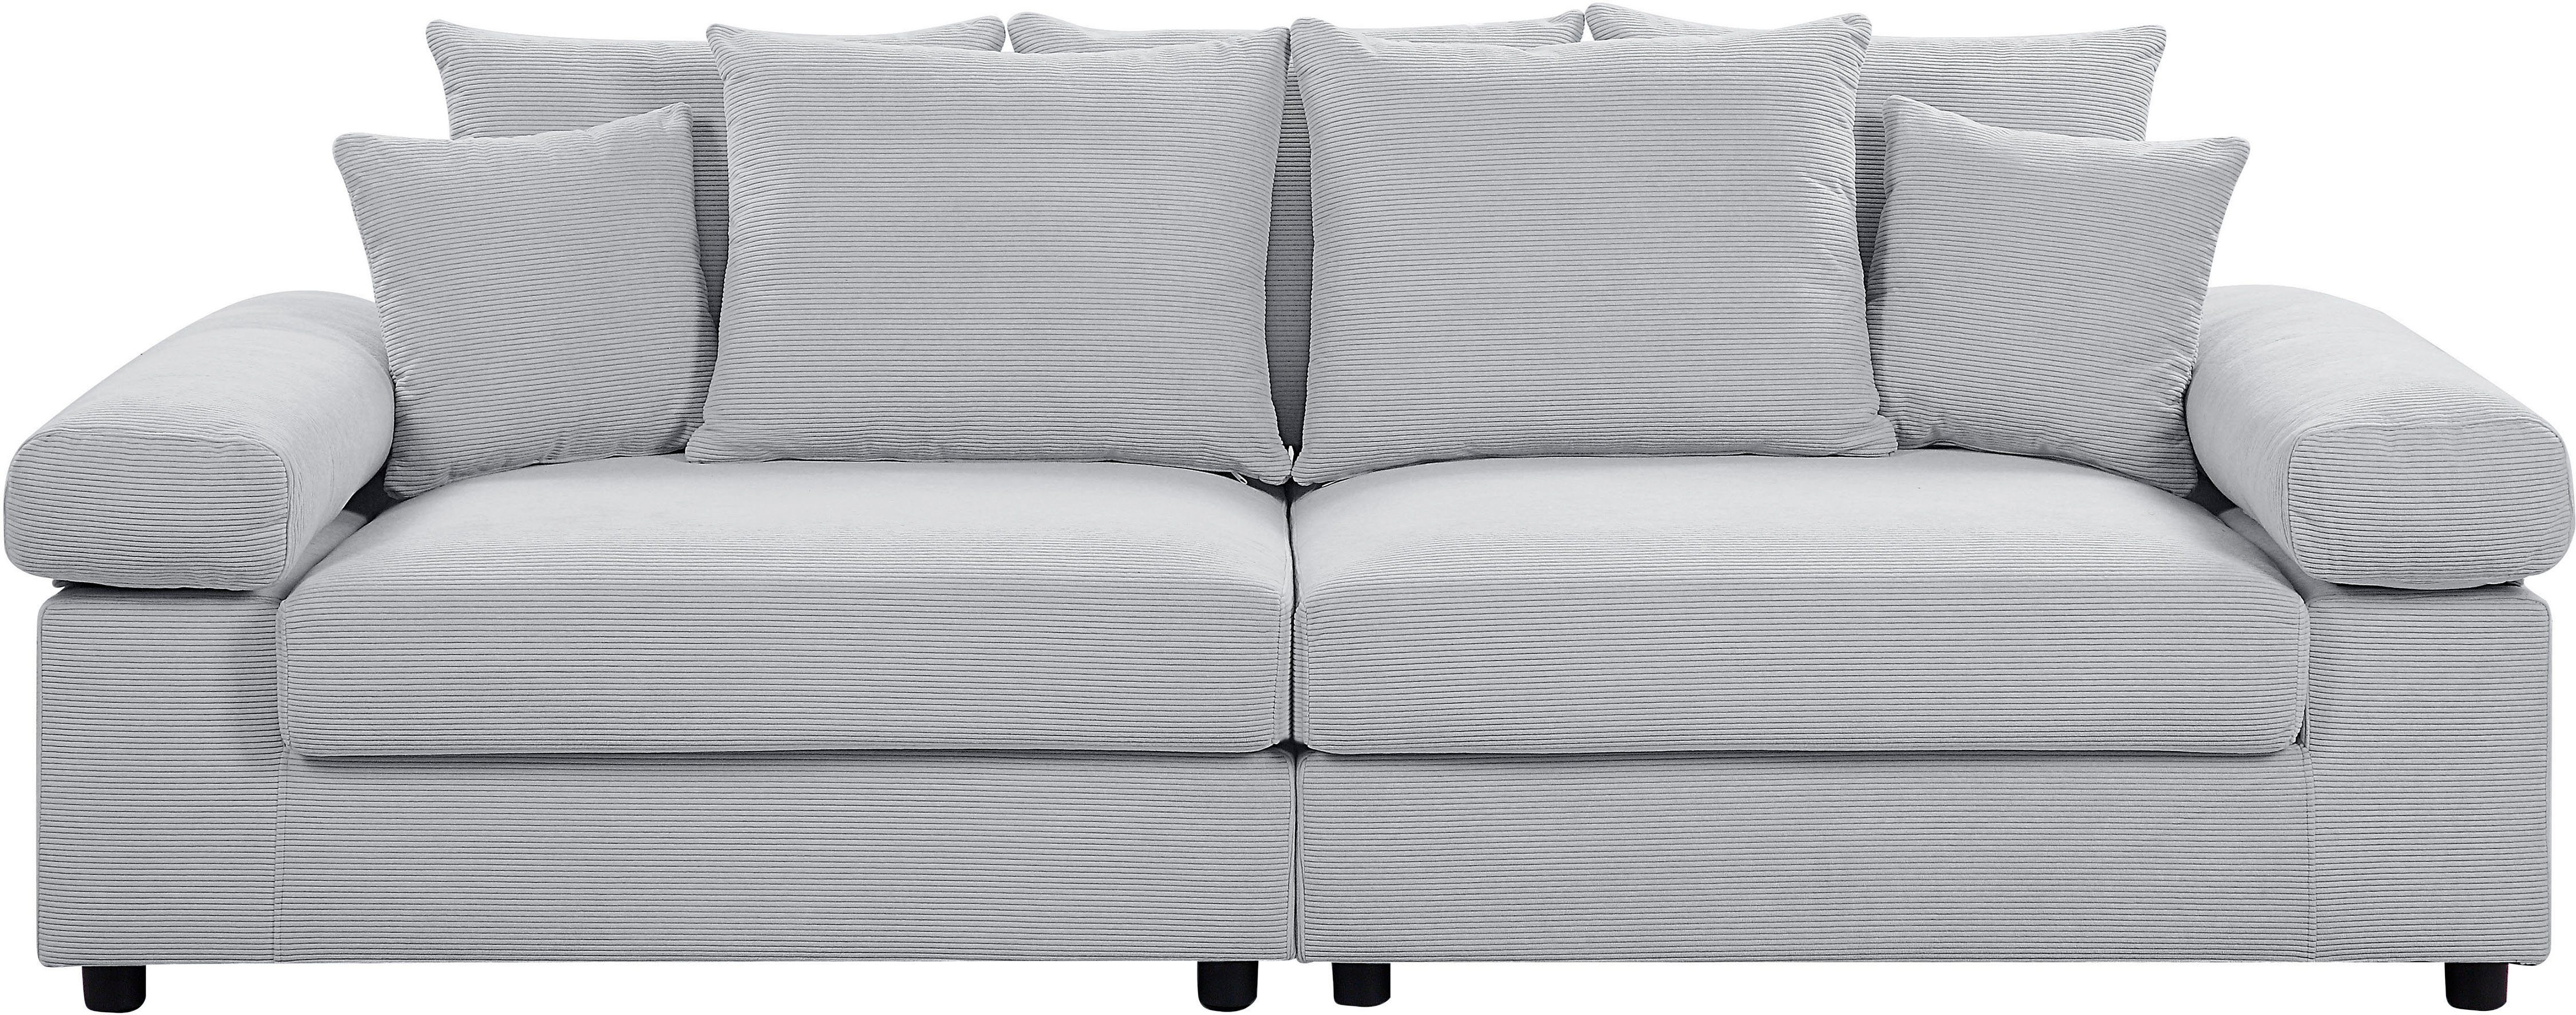 Bjoern, Cord-Bezug, XXL-Sitzfläche, frei Big-Sofa stellbar Raum mit Federkern, grau mit collection home im ATLANTIC